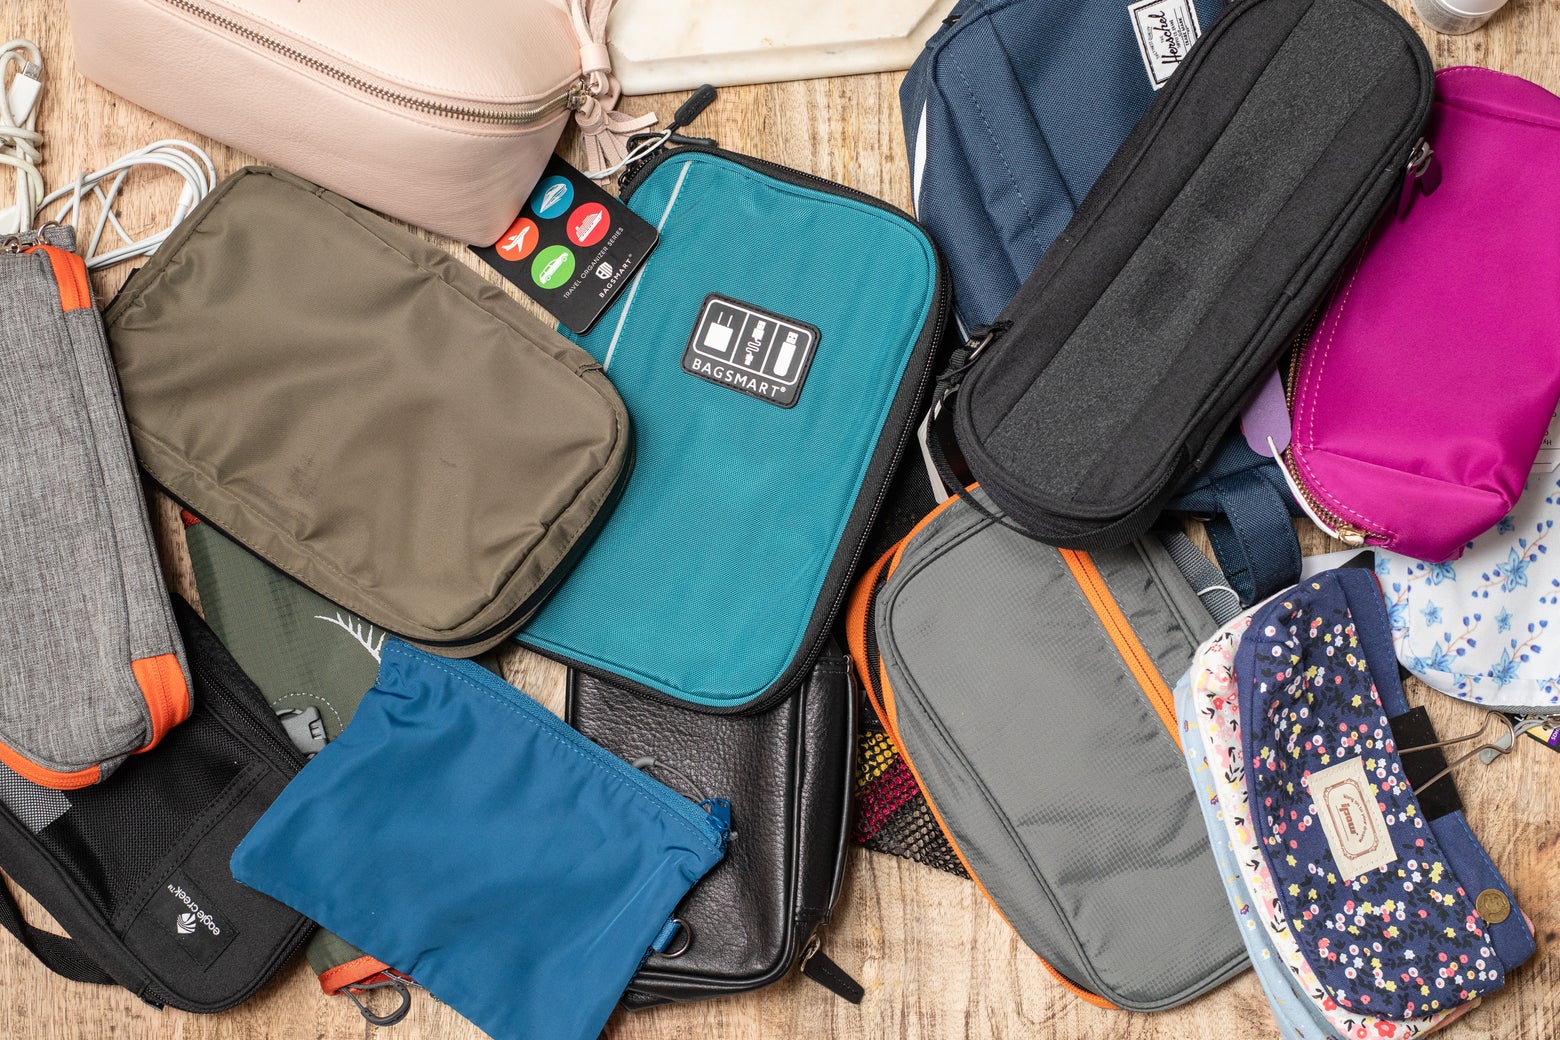 17 Stories Travel Makeup Bag Small Cosmetic Bag Organizer Case